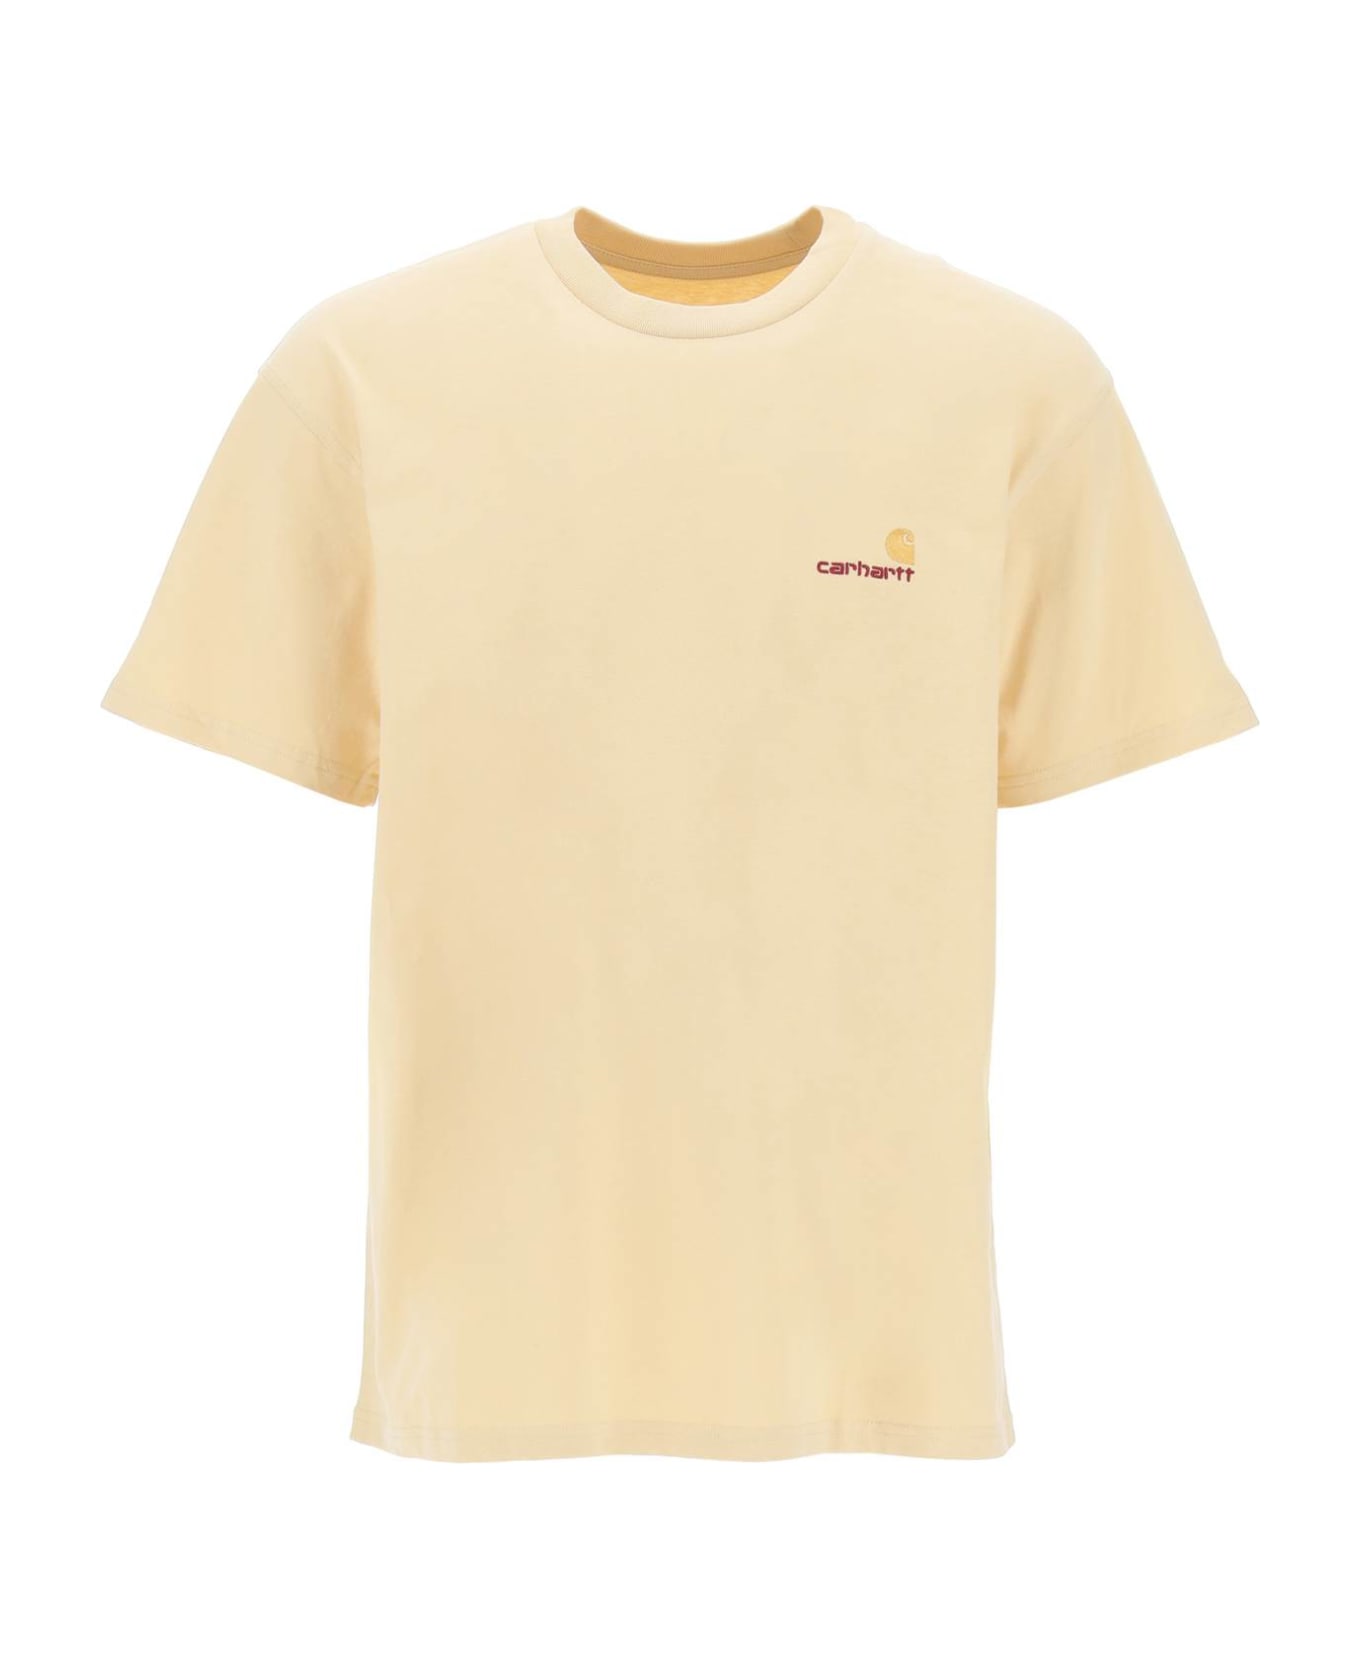 Carhartt American Script T-shirt - RATTAN (Yellow)